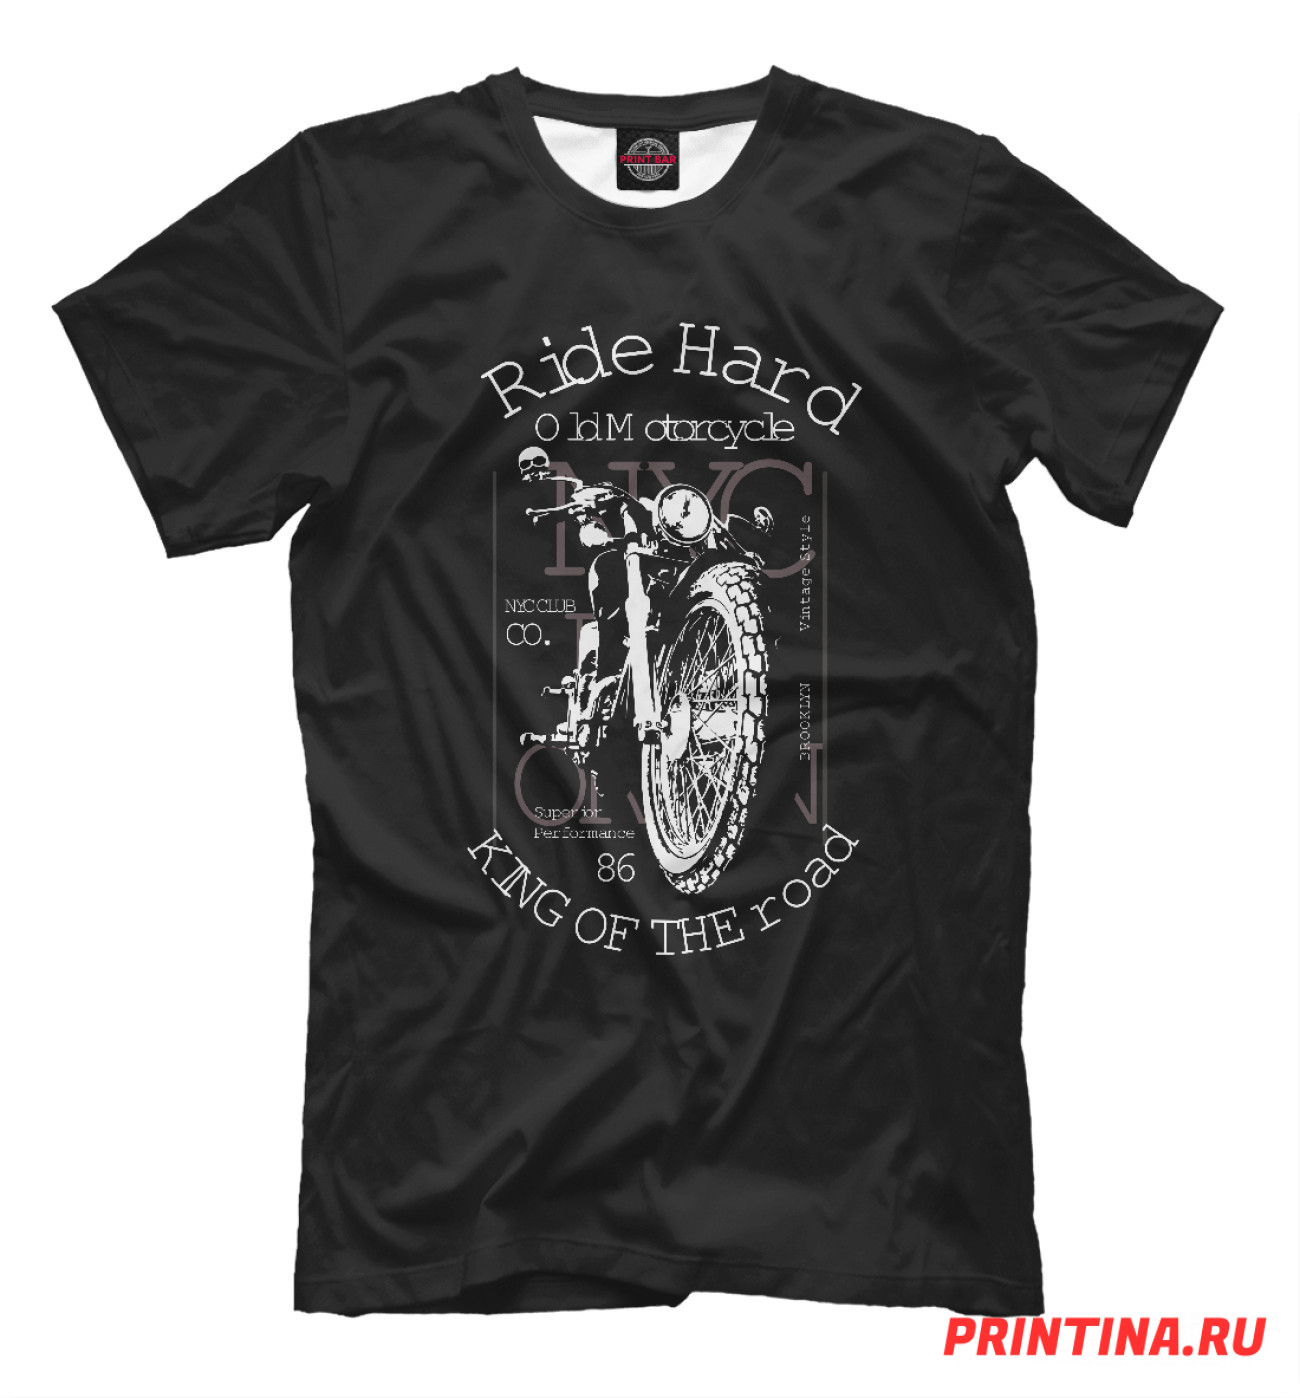 Мужская Футболка Ride Hard, артикул: BKR-671239-fut-2